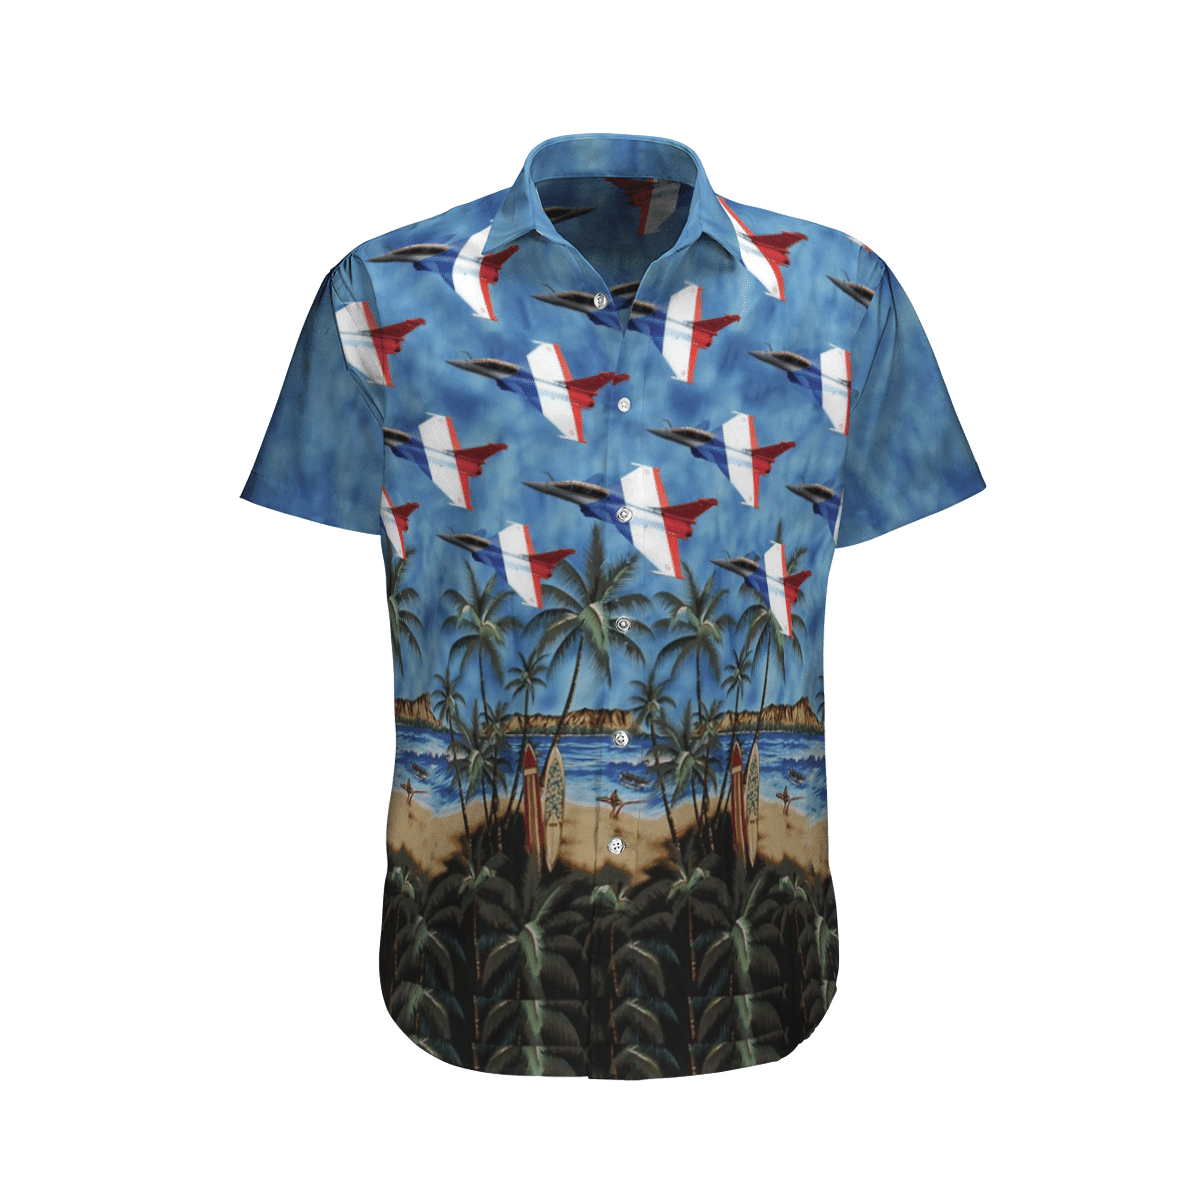 Enjoy your summer with top cool hawaiian shirt below 76